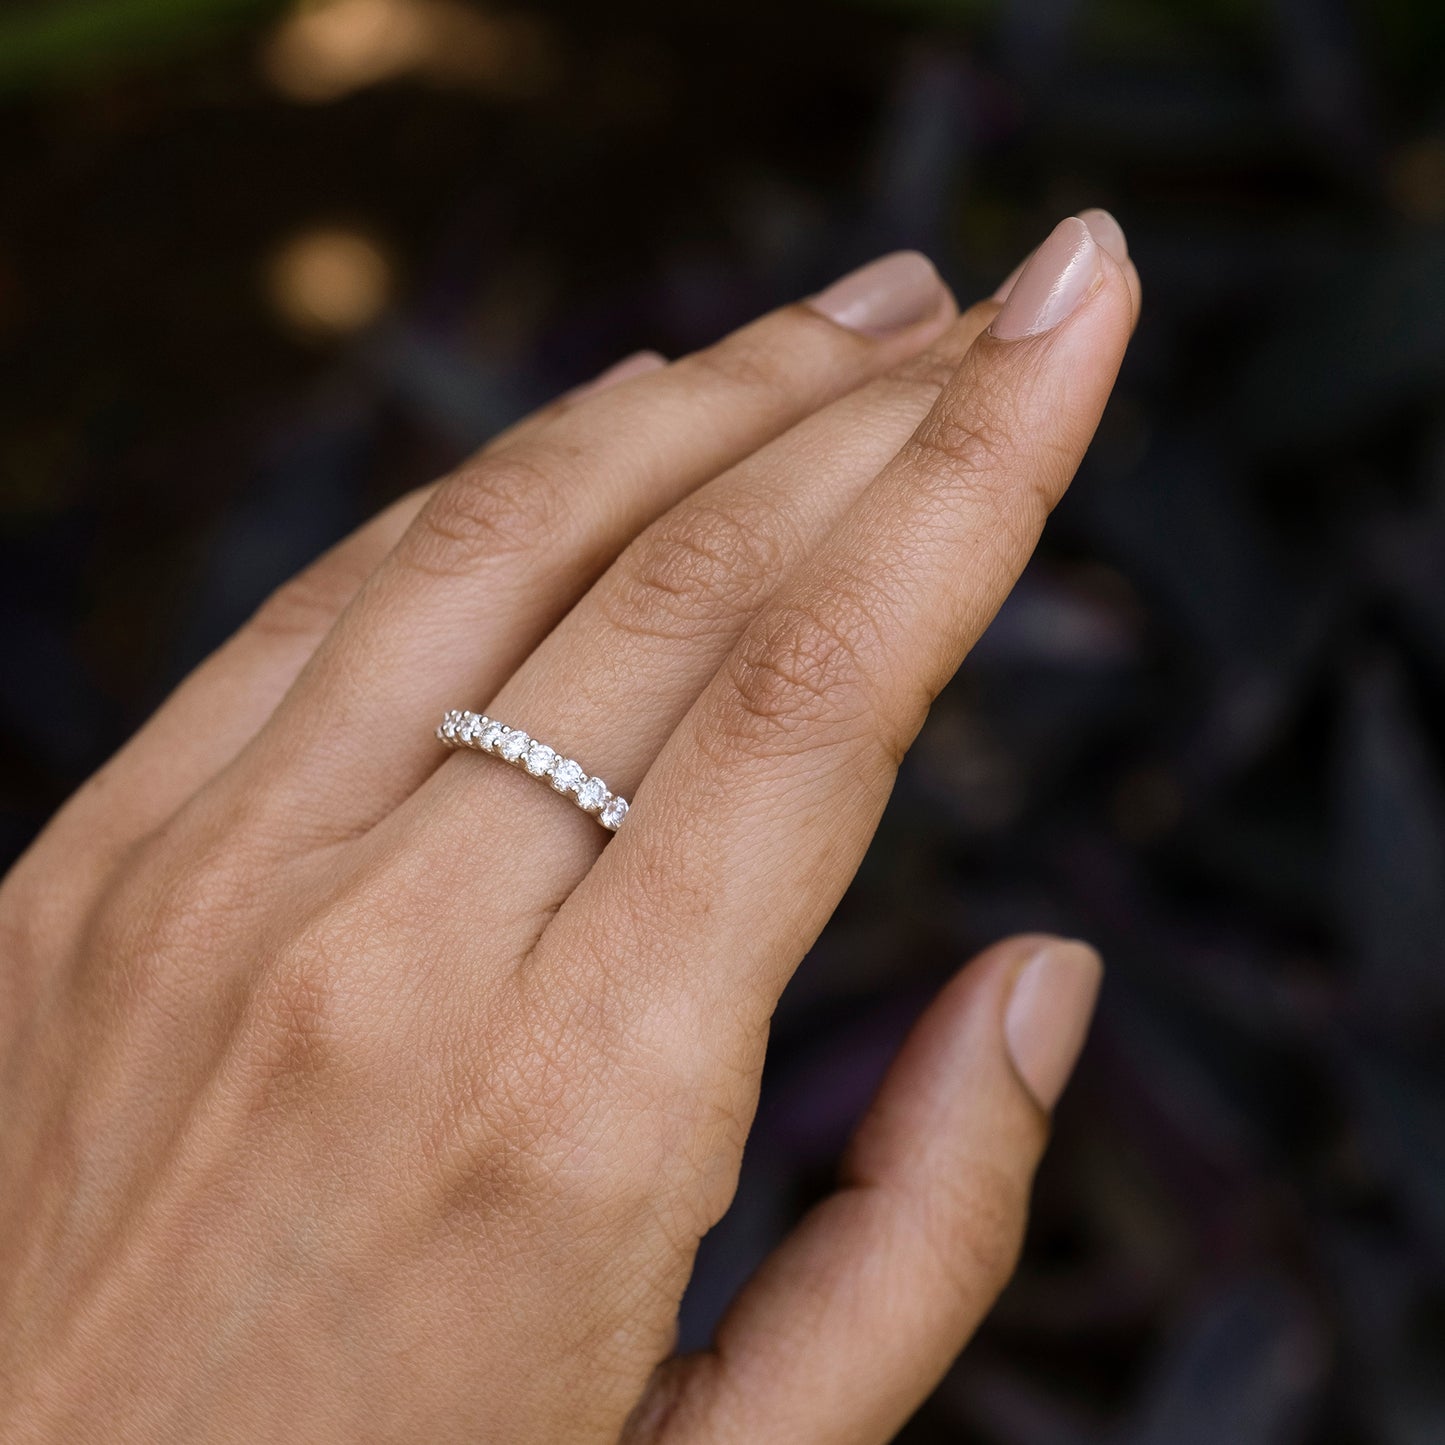 IGI Certified 14K Solid White Gold Diamond Ring, 1.41 Carat SI/H-I Diamond Eternity Wedding Band (Size US 7)